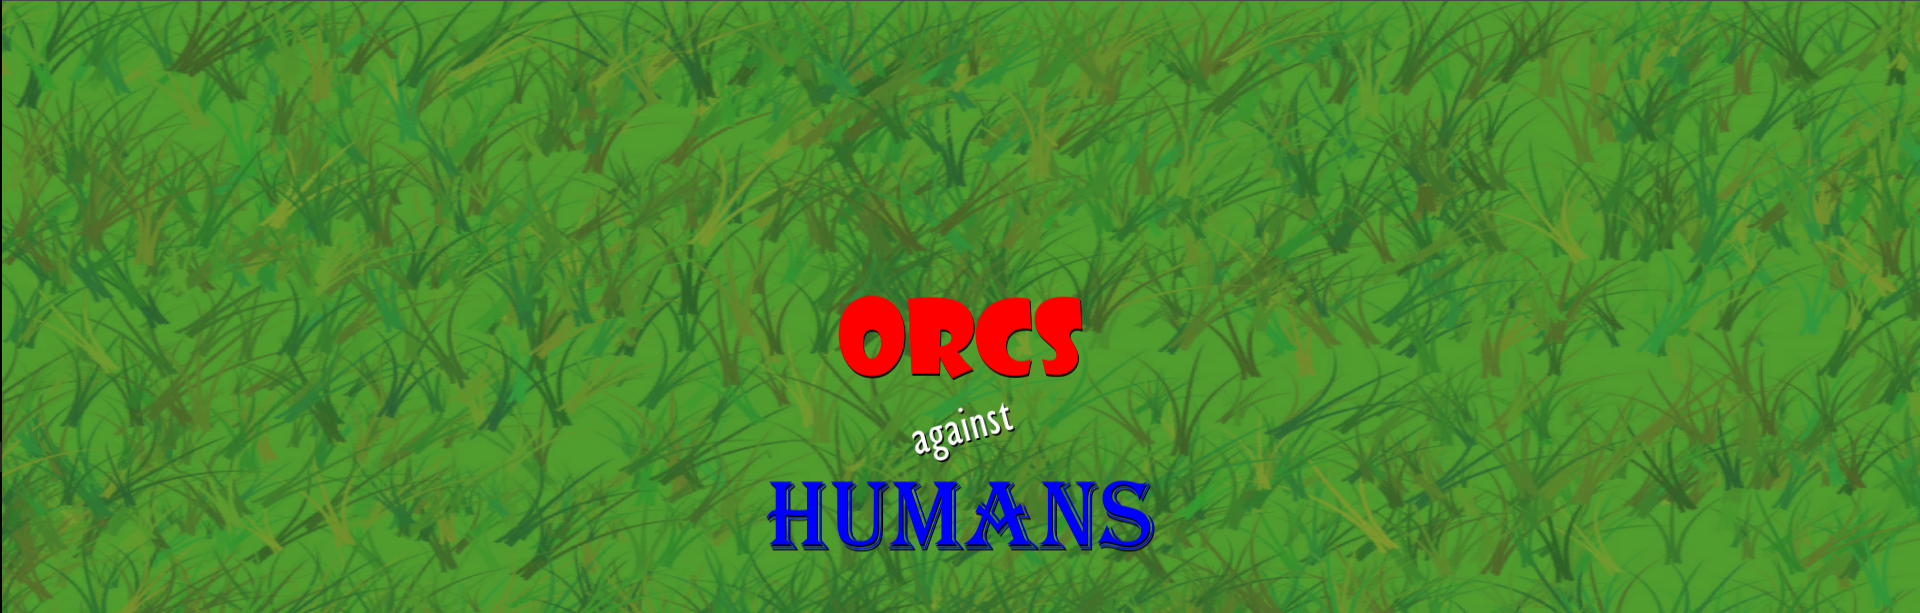 Orcs Against Humans